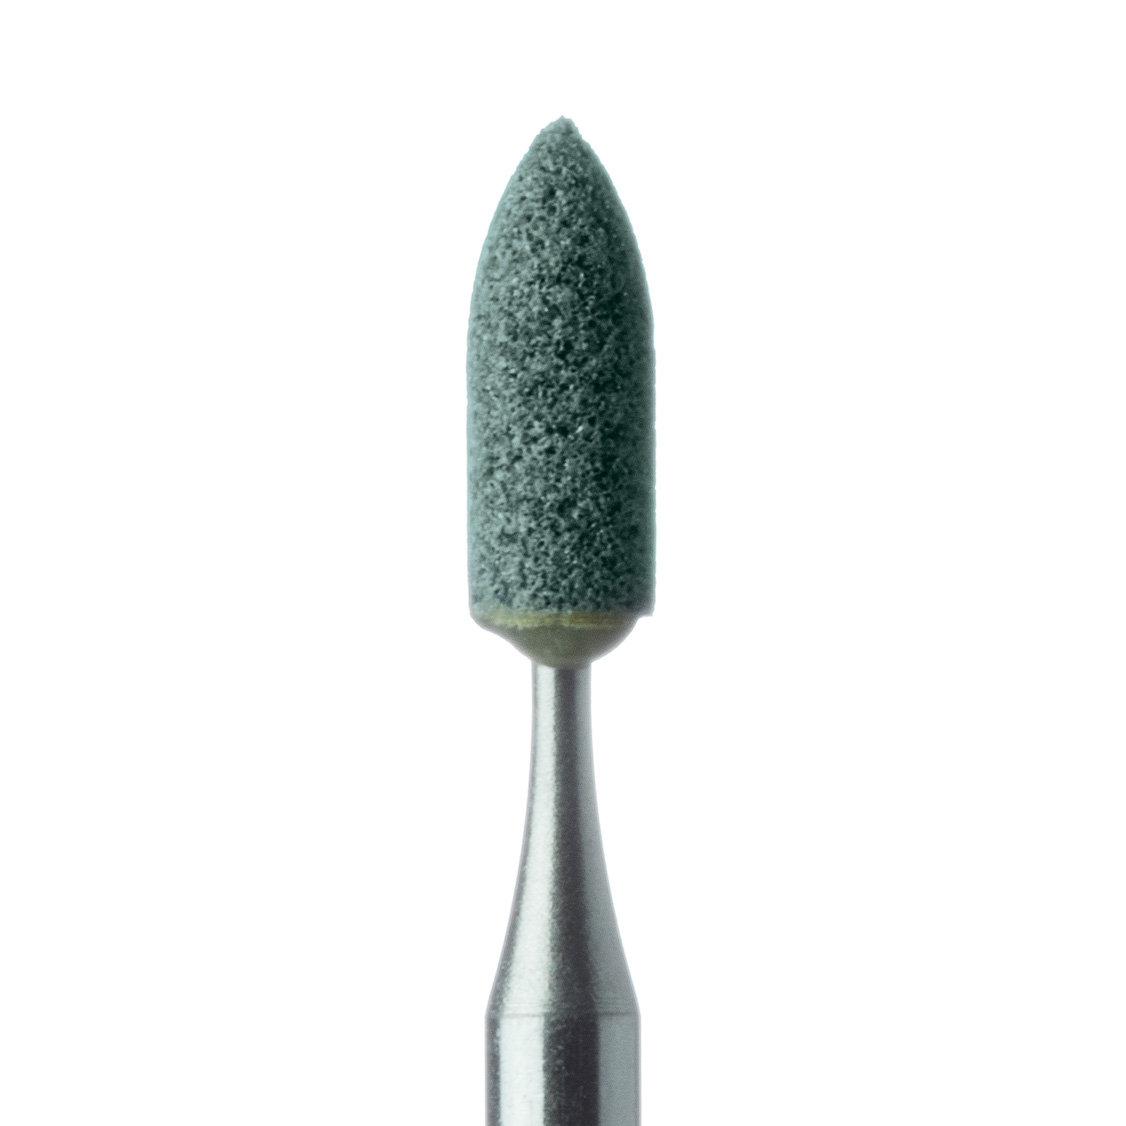 661-025-RA-GRN Abrasive, Green, Nose Cone, 2.5mm Ø, Medium, RA